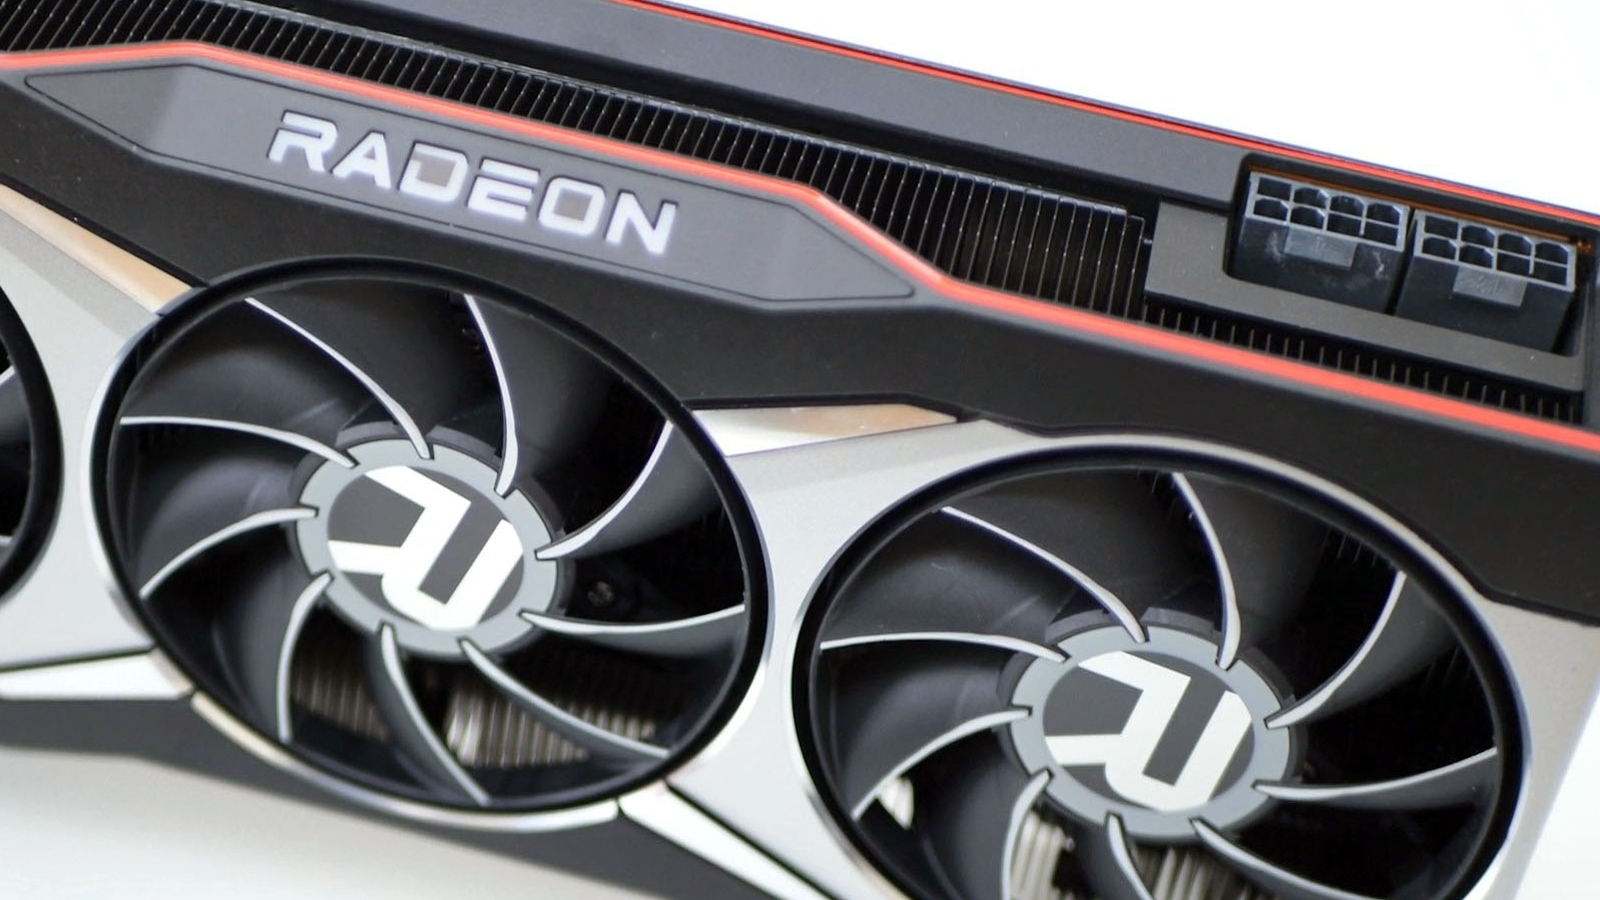 AMD Radeon RX 6900 XT review